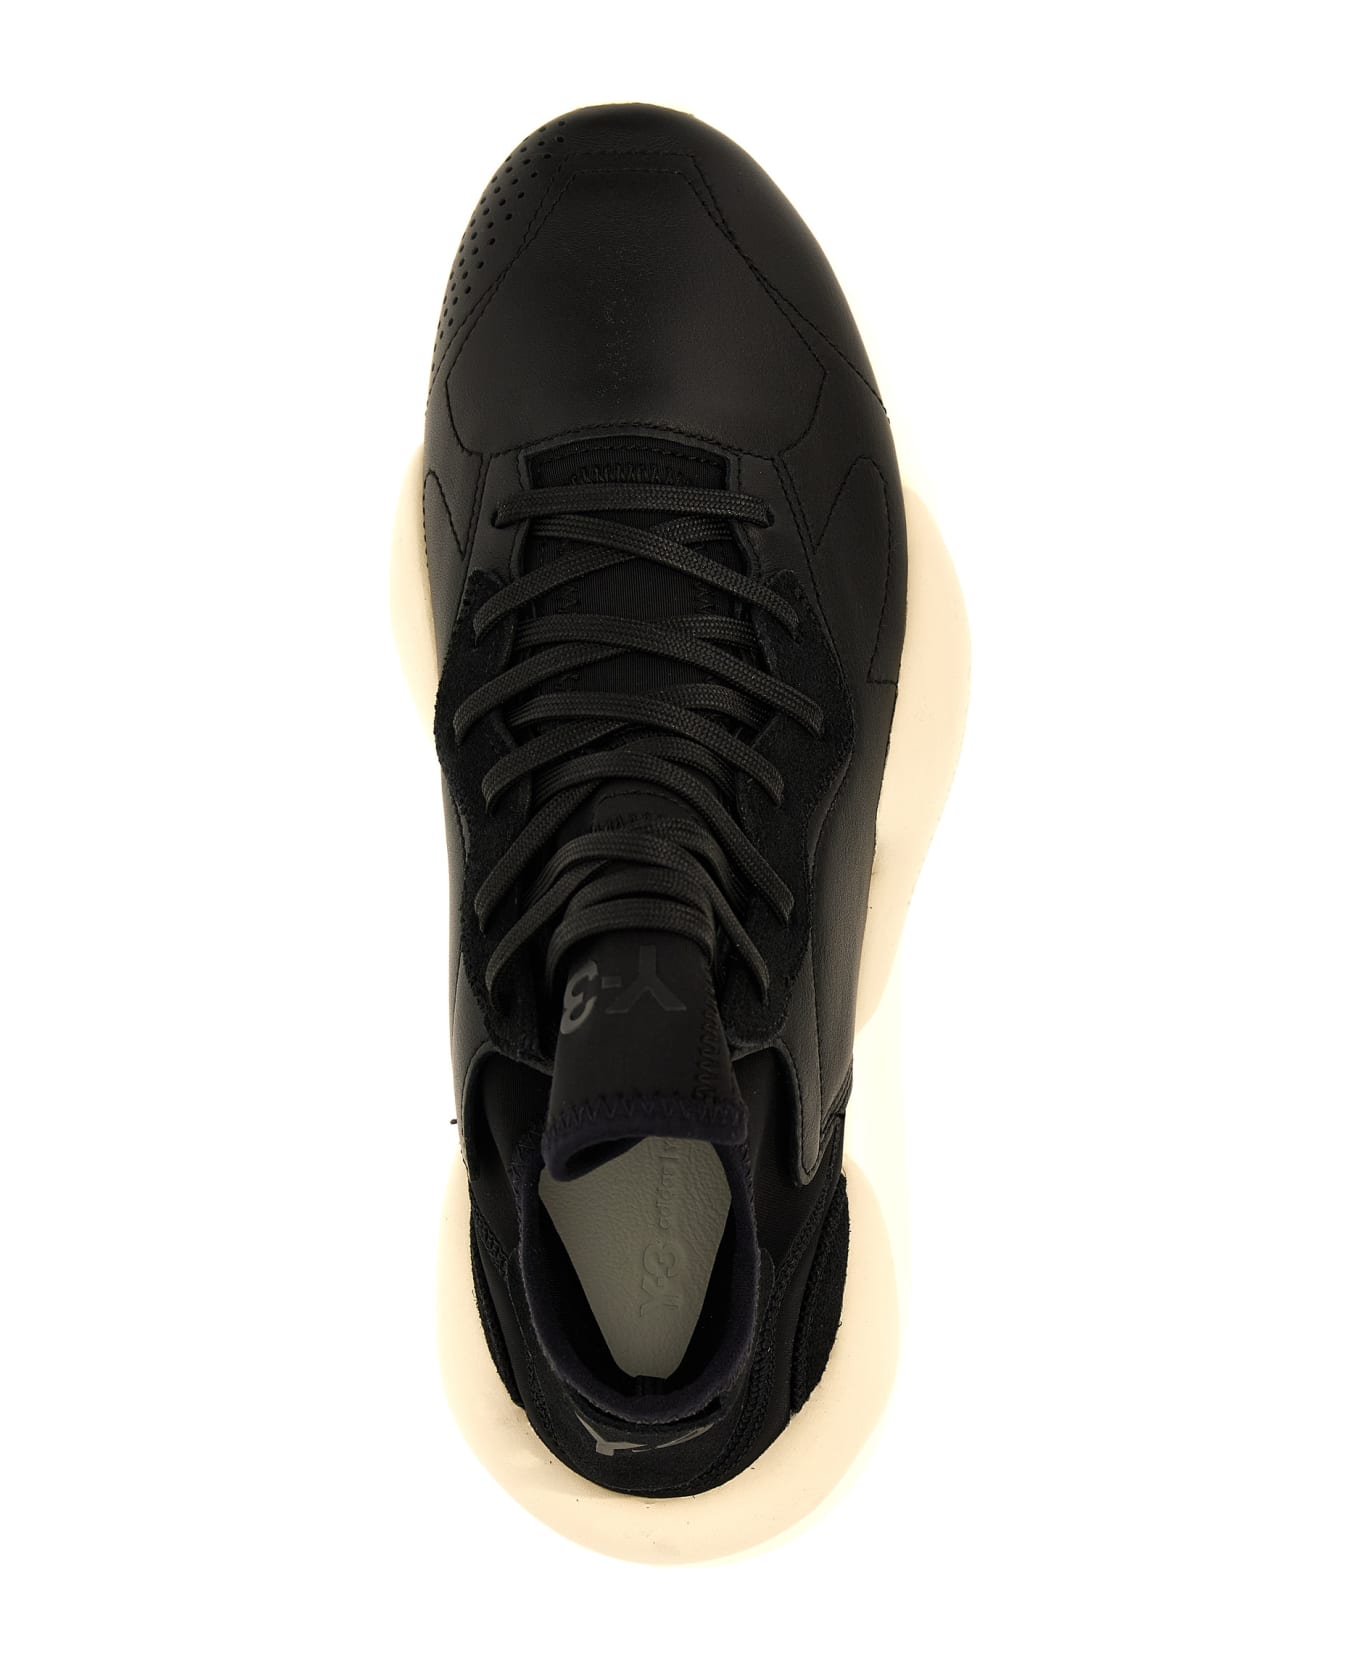 Y-3 'kaiwa' Sneakers - White/Black スニーカー